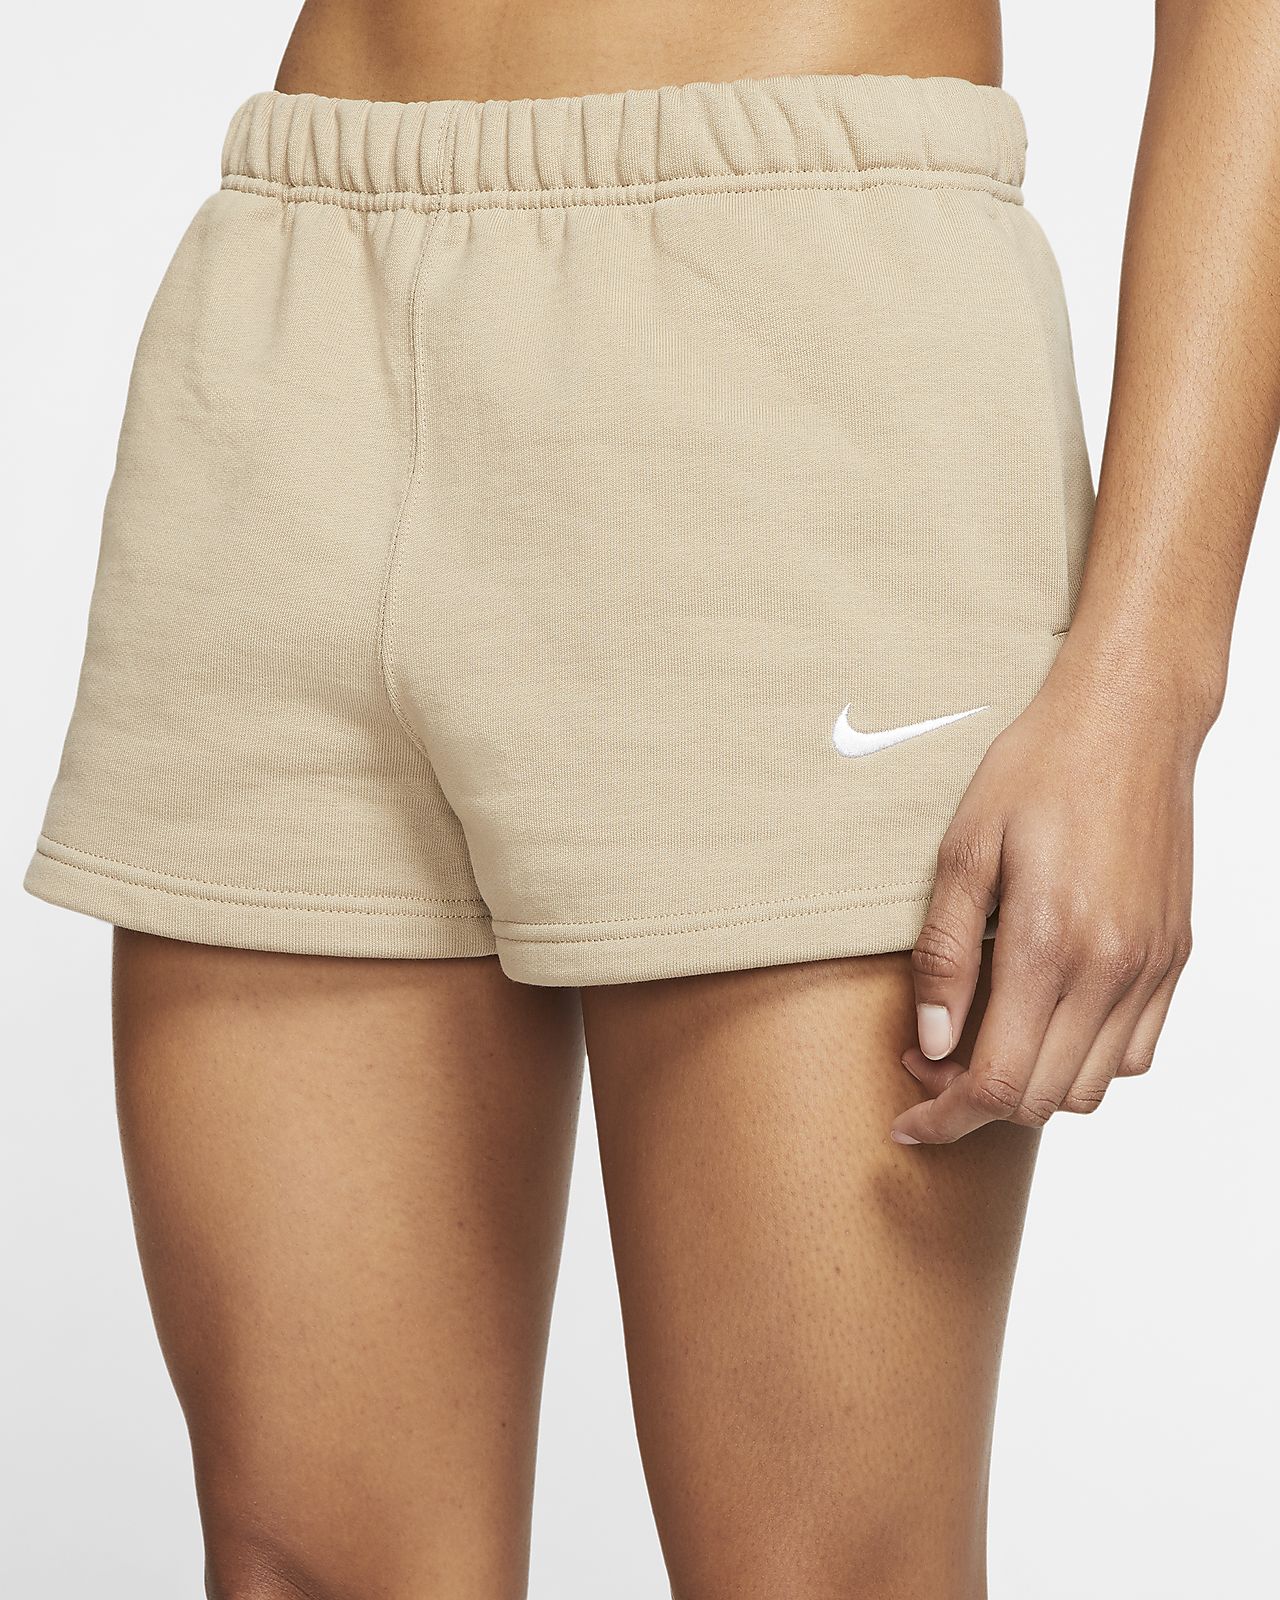 new nike shorts for women